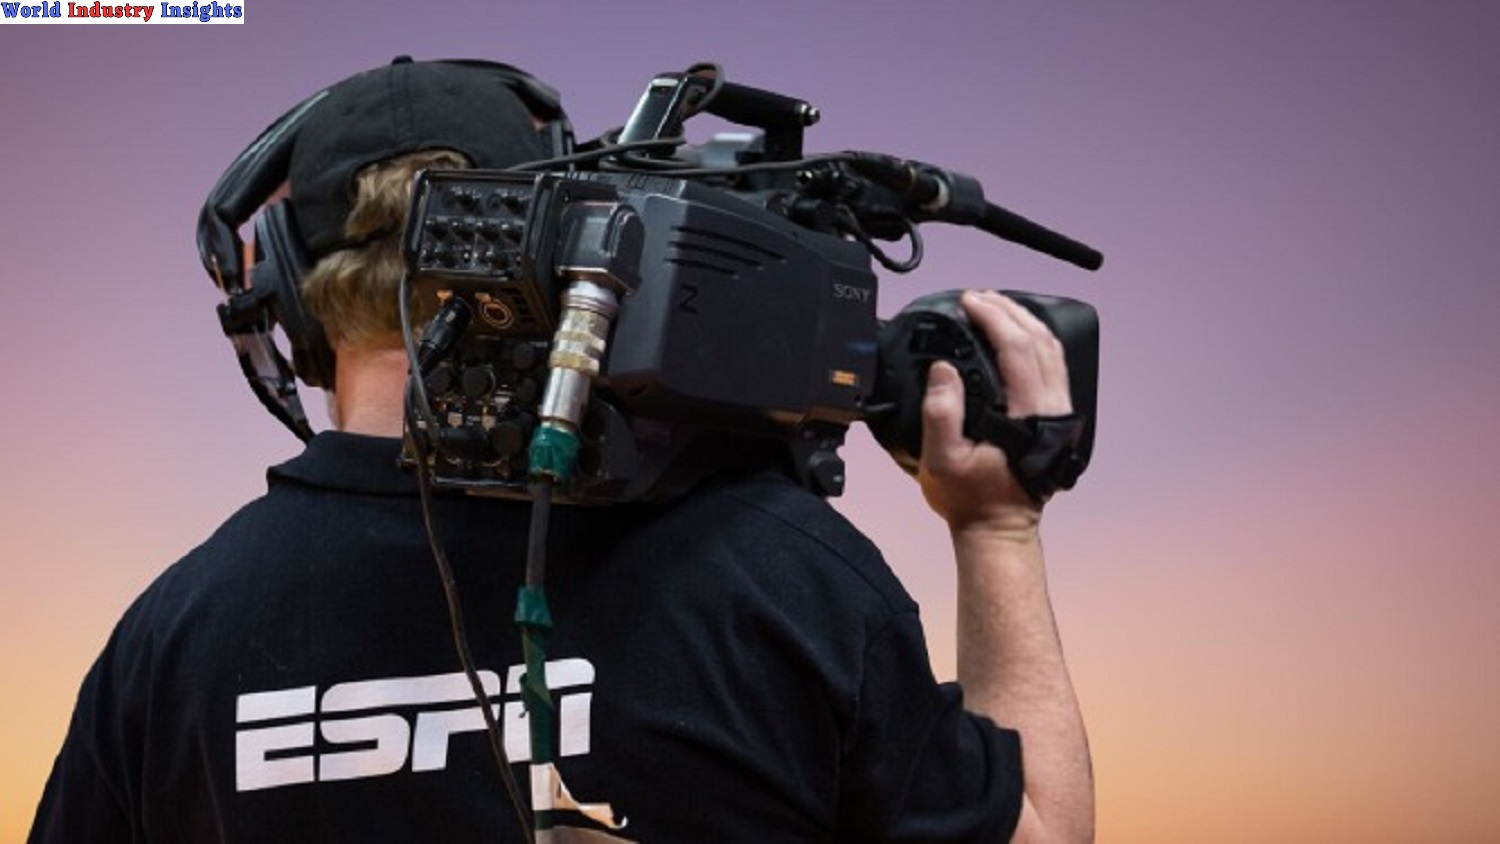 ESPN Shift to Digital